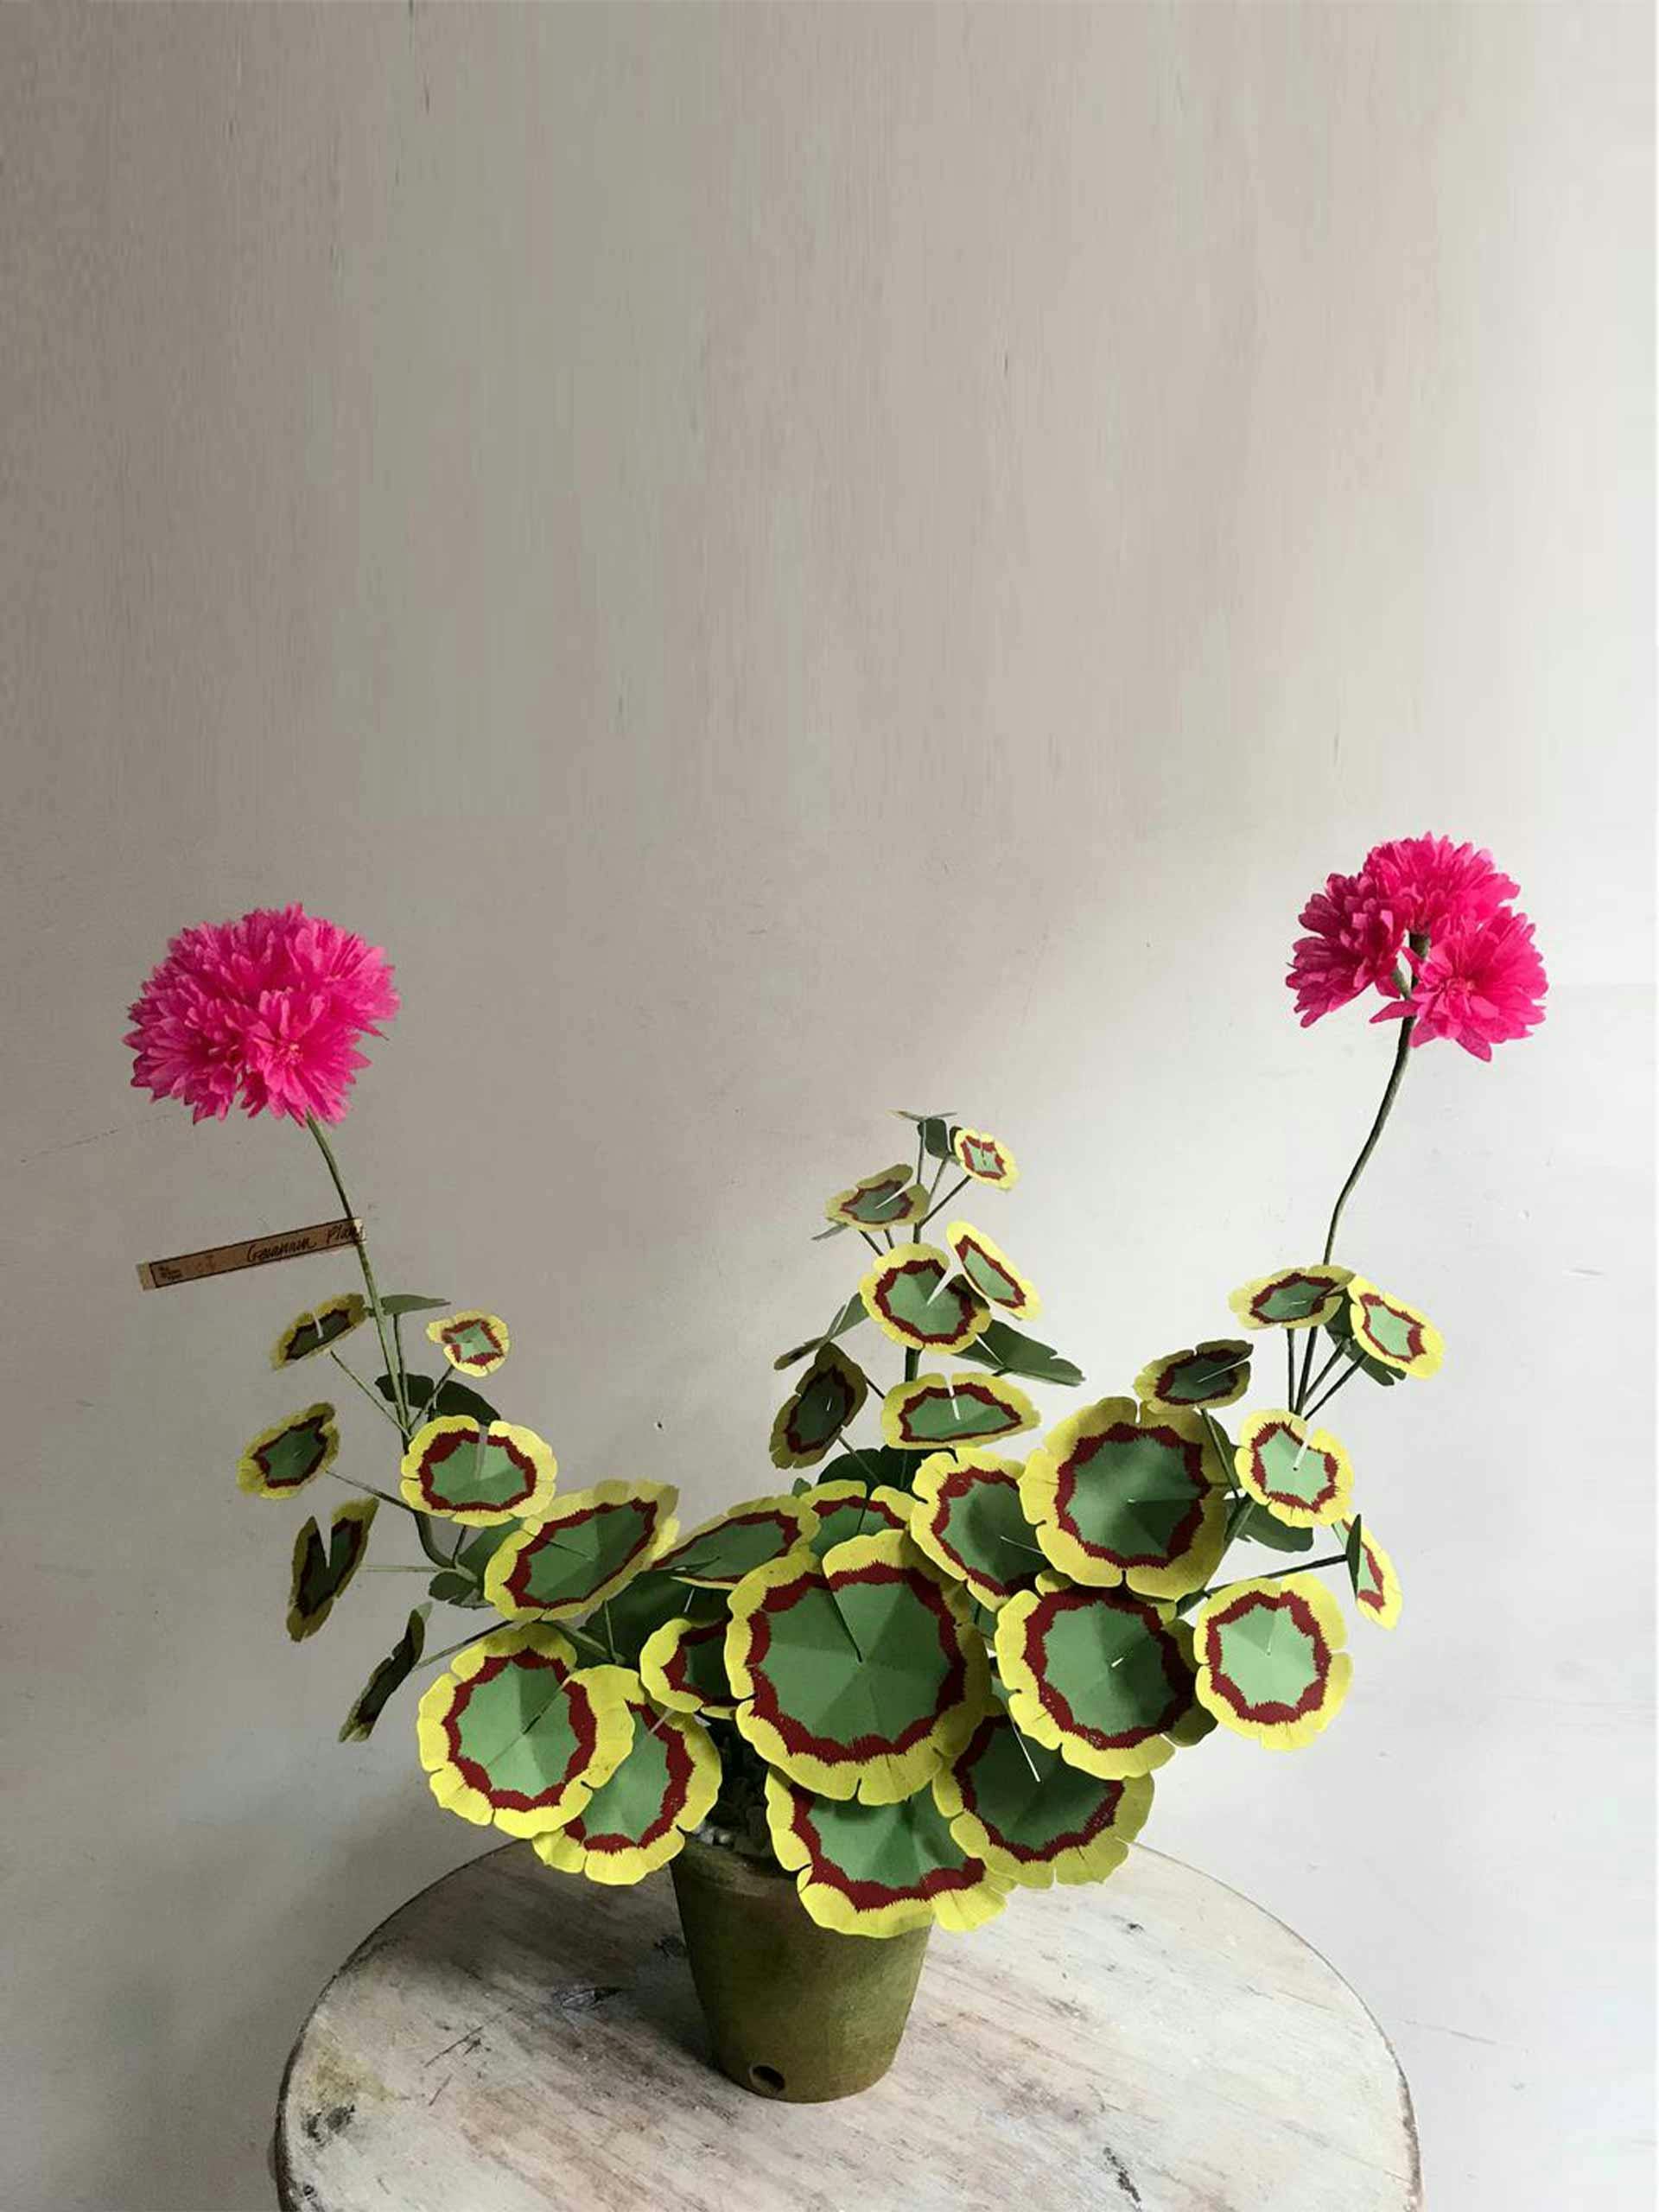 Handmade pink Geranium with a green vase